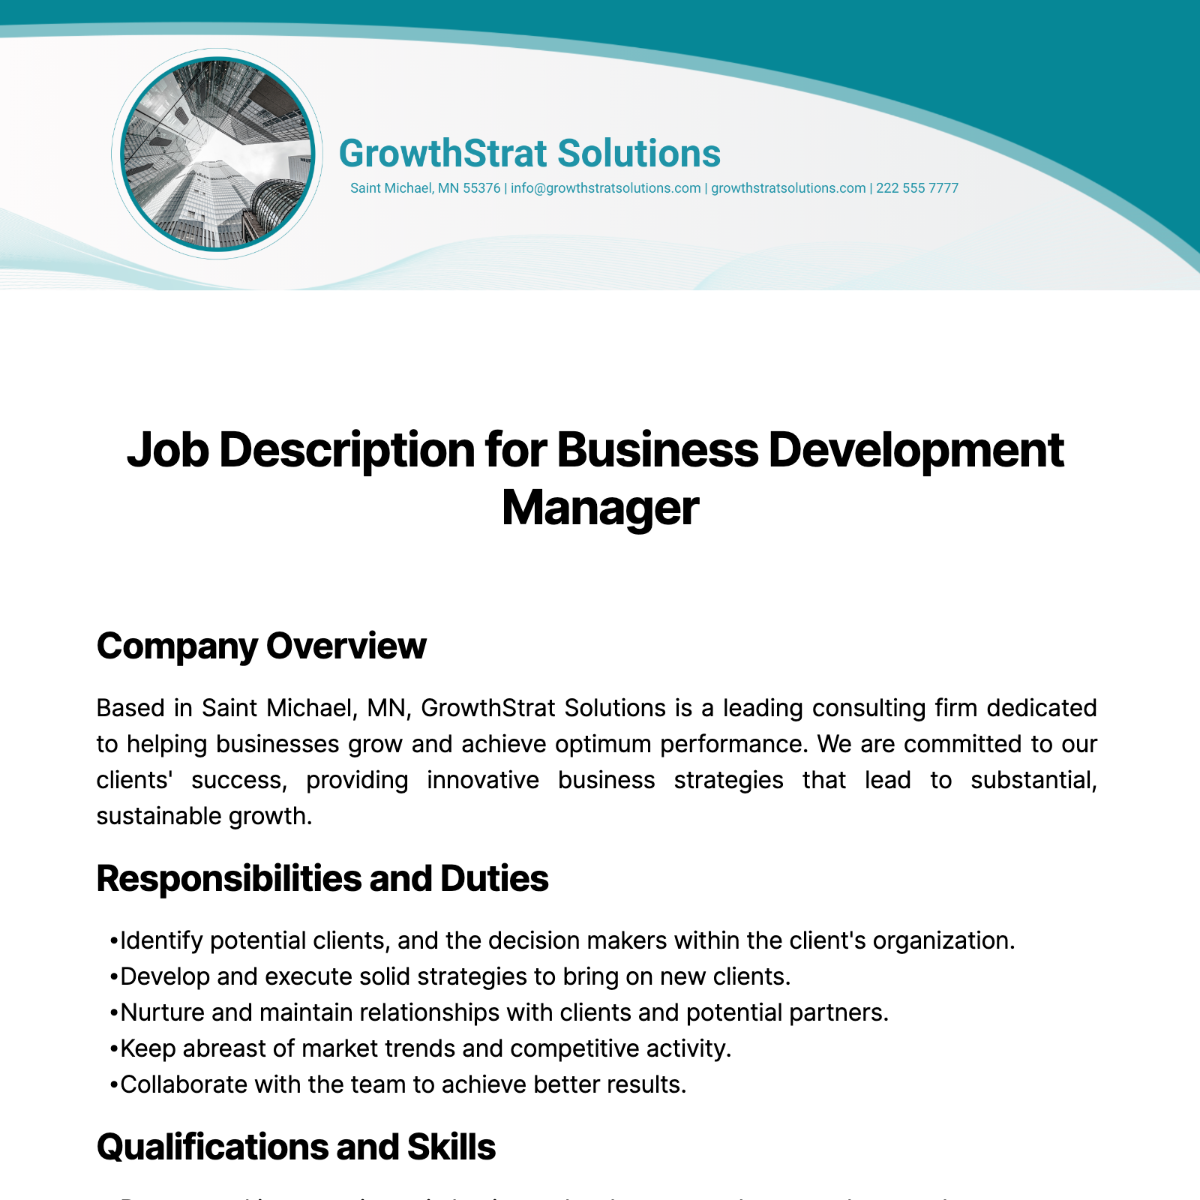 Job Description for Business Development Manager Template